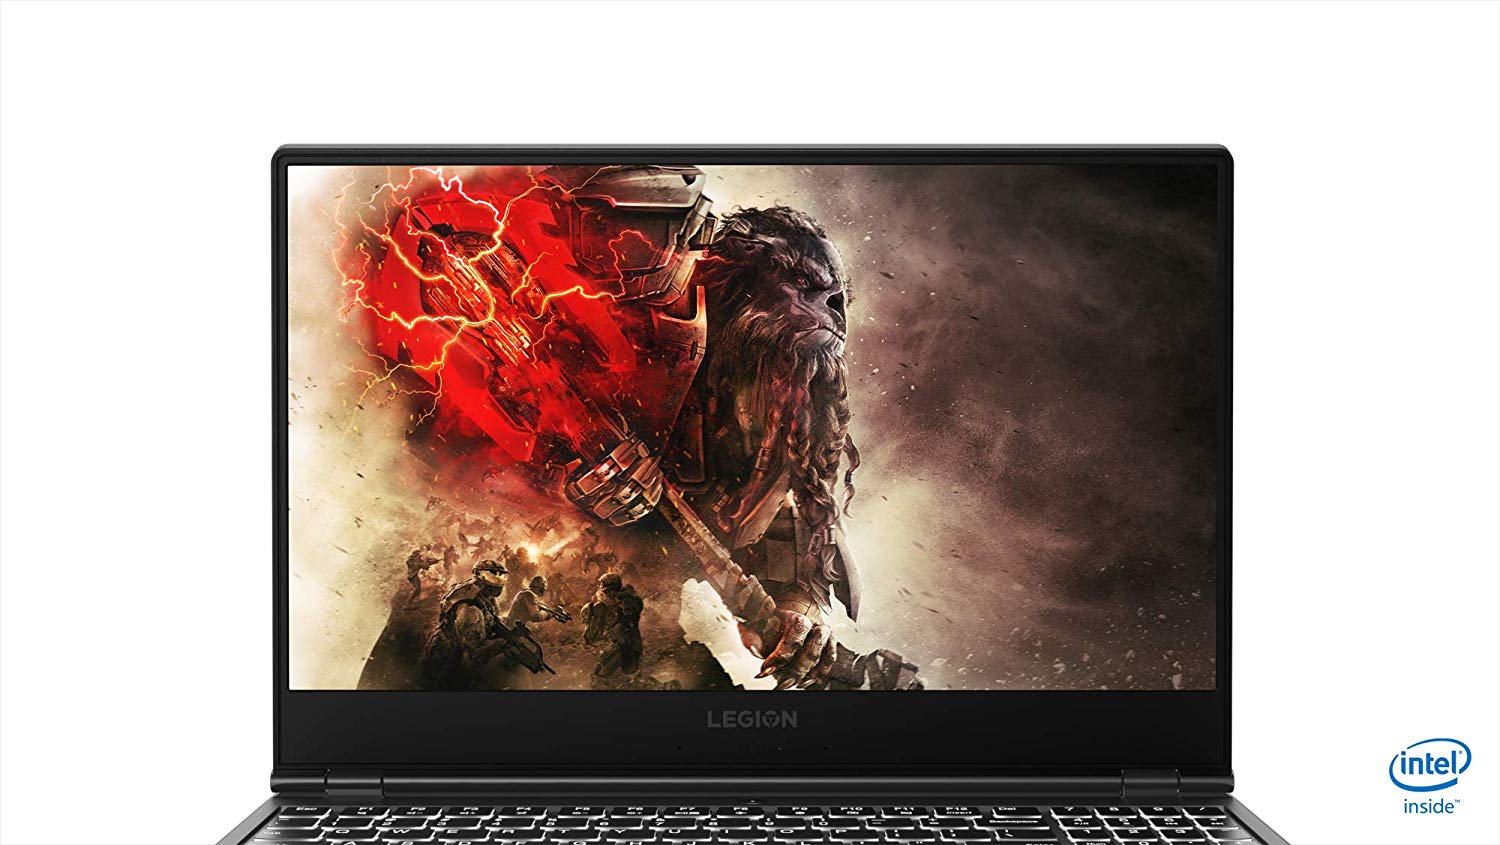 Lenovo Legion Y530 Intel Core I5 8th Gen 15.6 - inch Gaming FHD Laptop (8GB/ 1TB HDD +128GB SSD/ Windows 10 Home/ 4GB Graphics/ Black), 81FV00JKIN